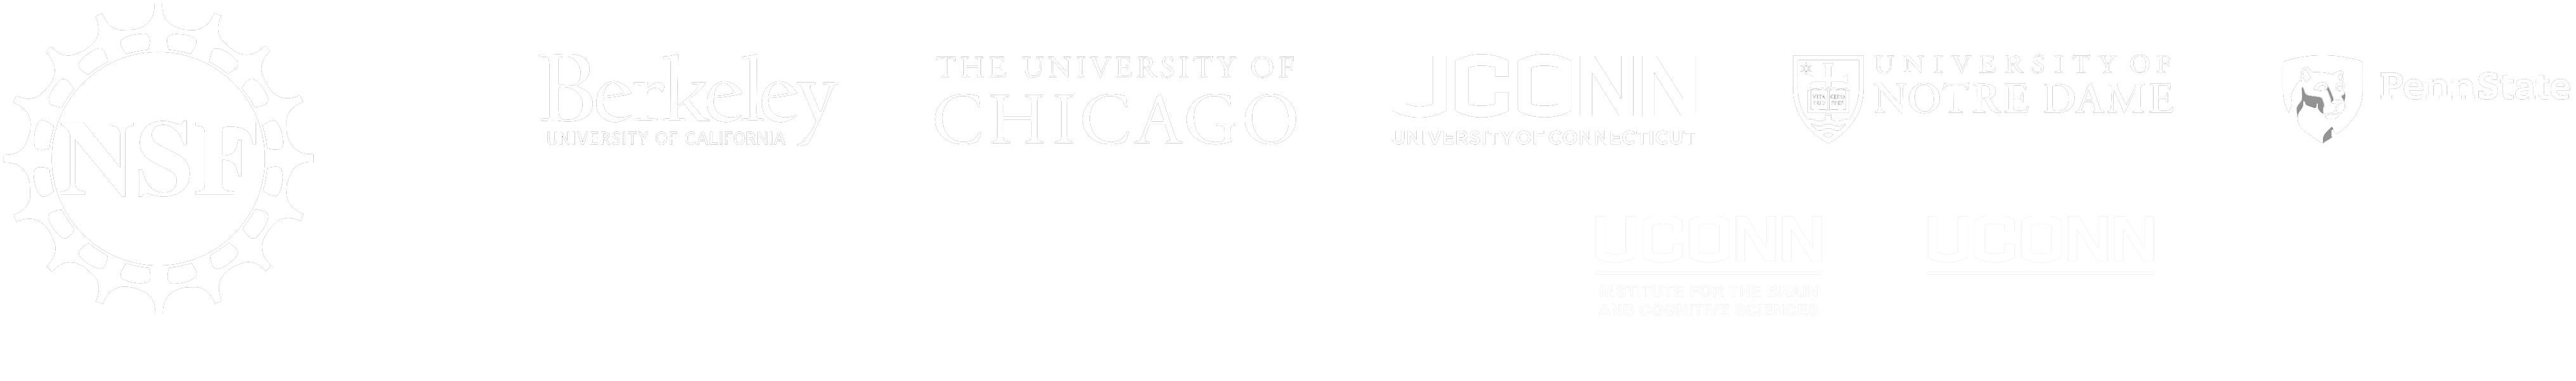 Logos of NSF, UC Berkeley, UChicago, UConn, Penn State, and Notre Dame